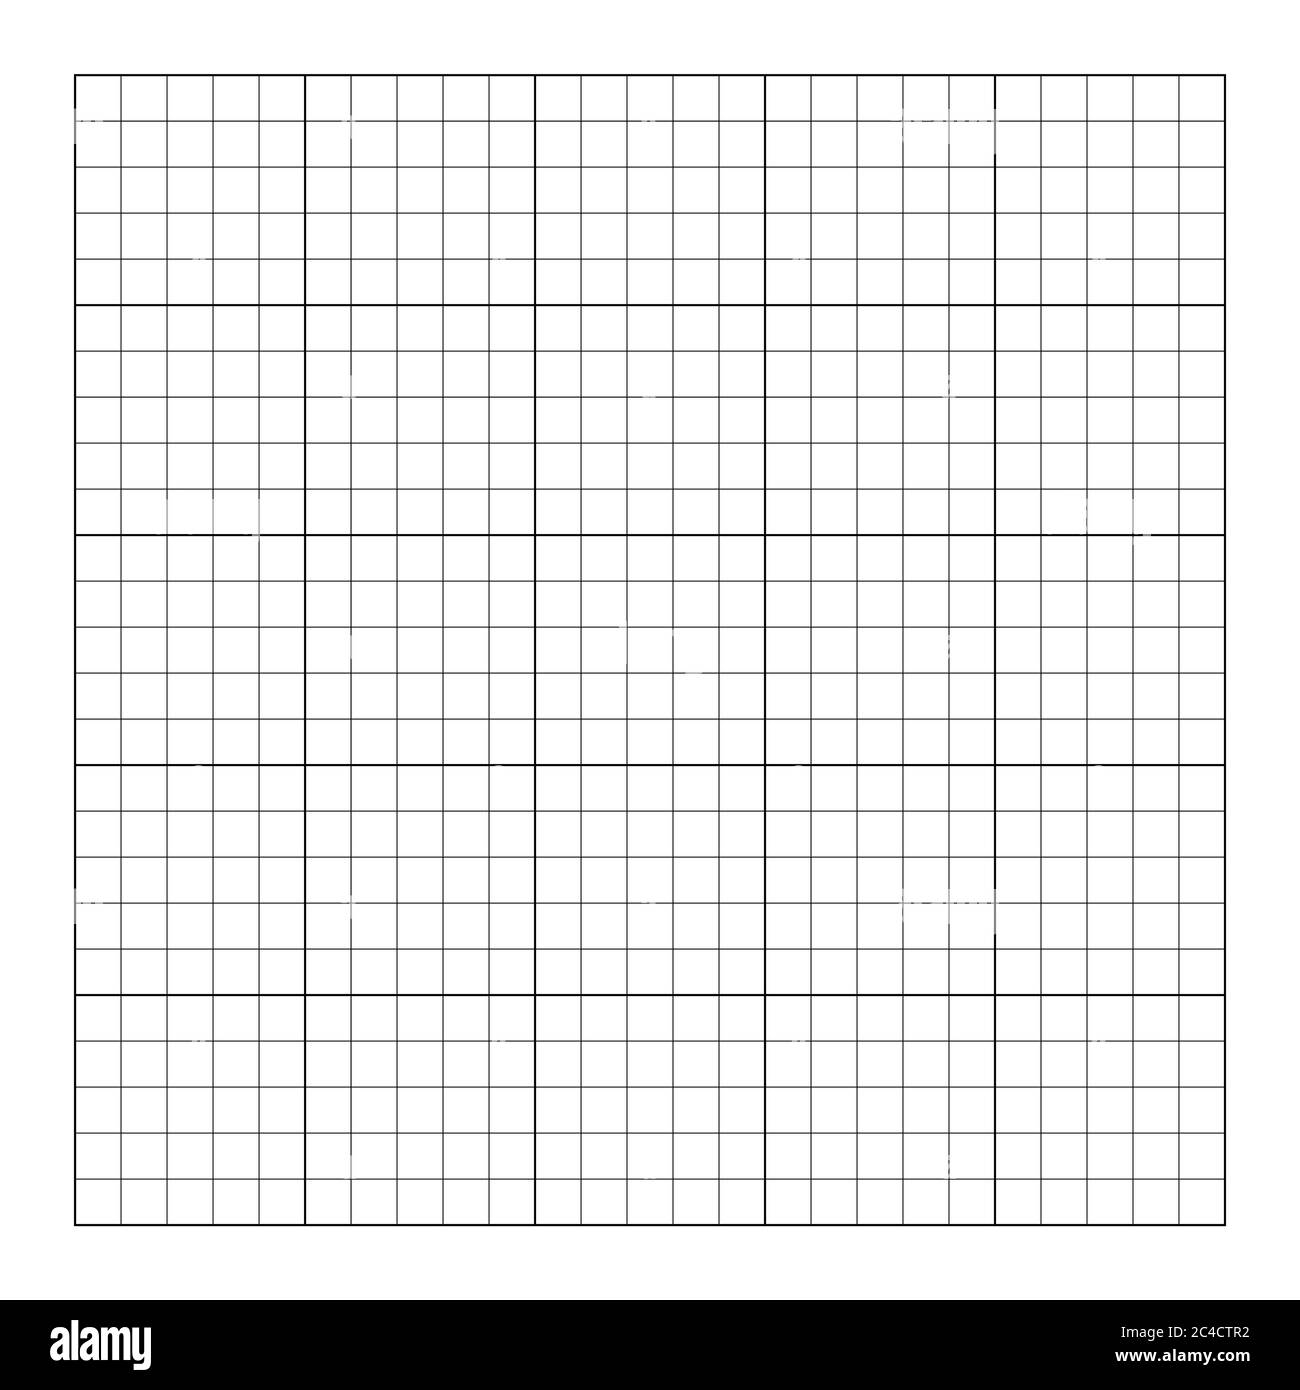 Sudoku Black and White Stock Photos & Images - Alamy